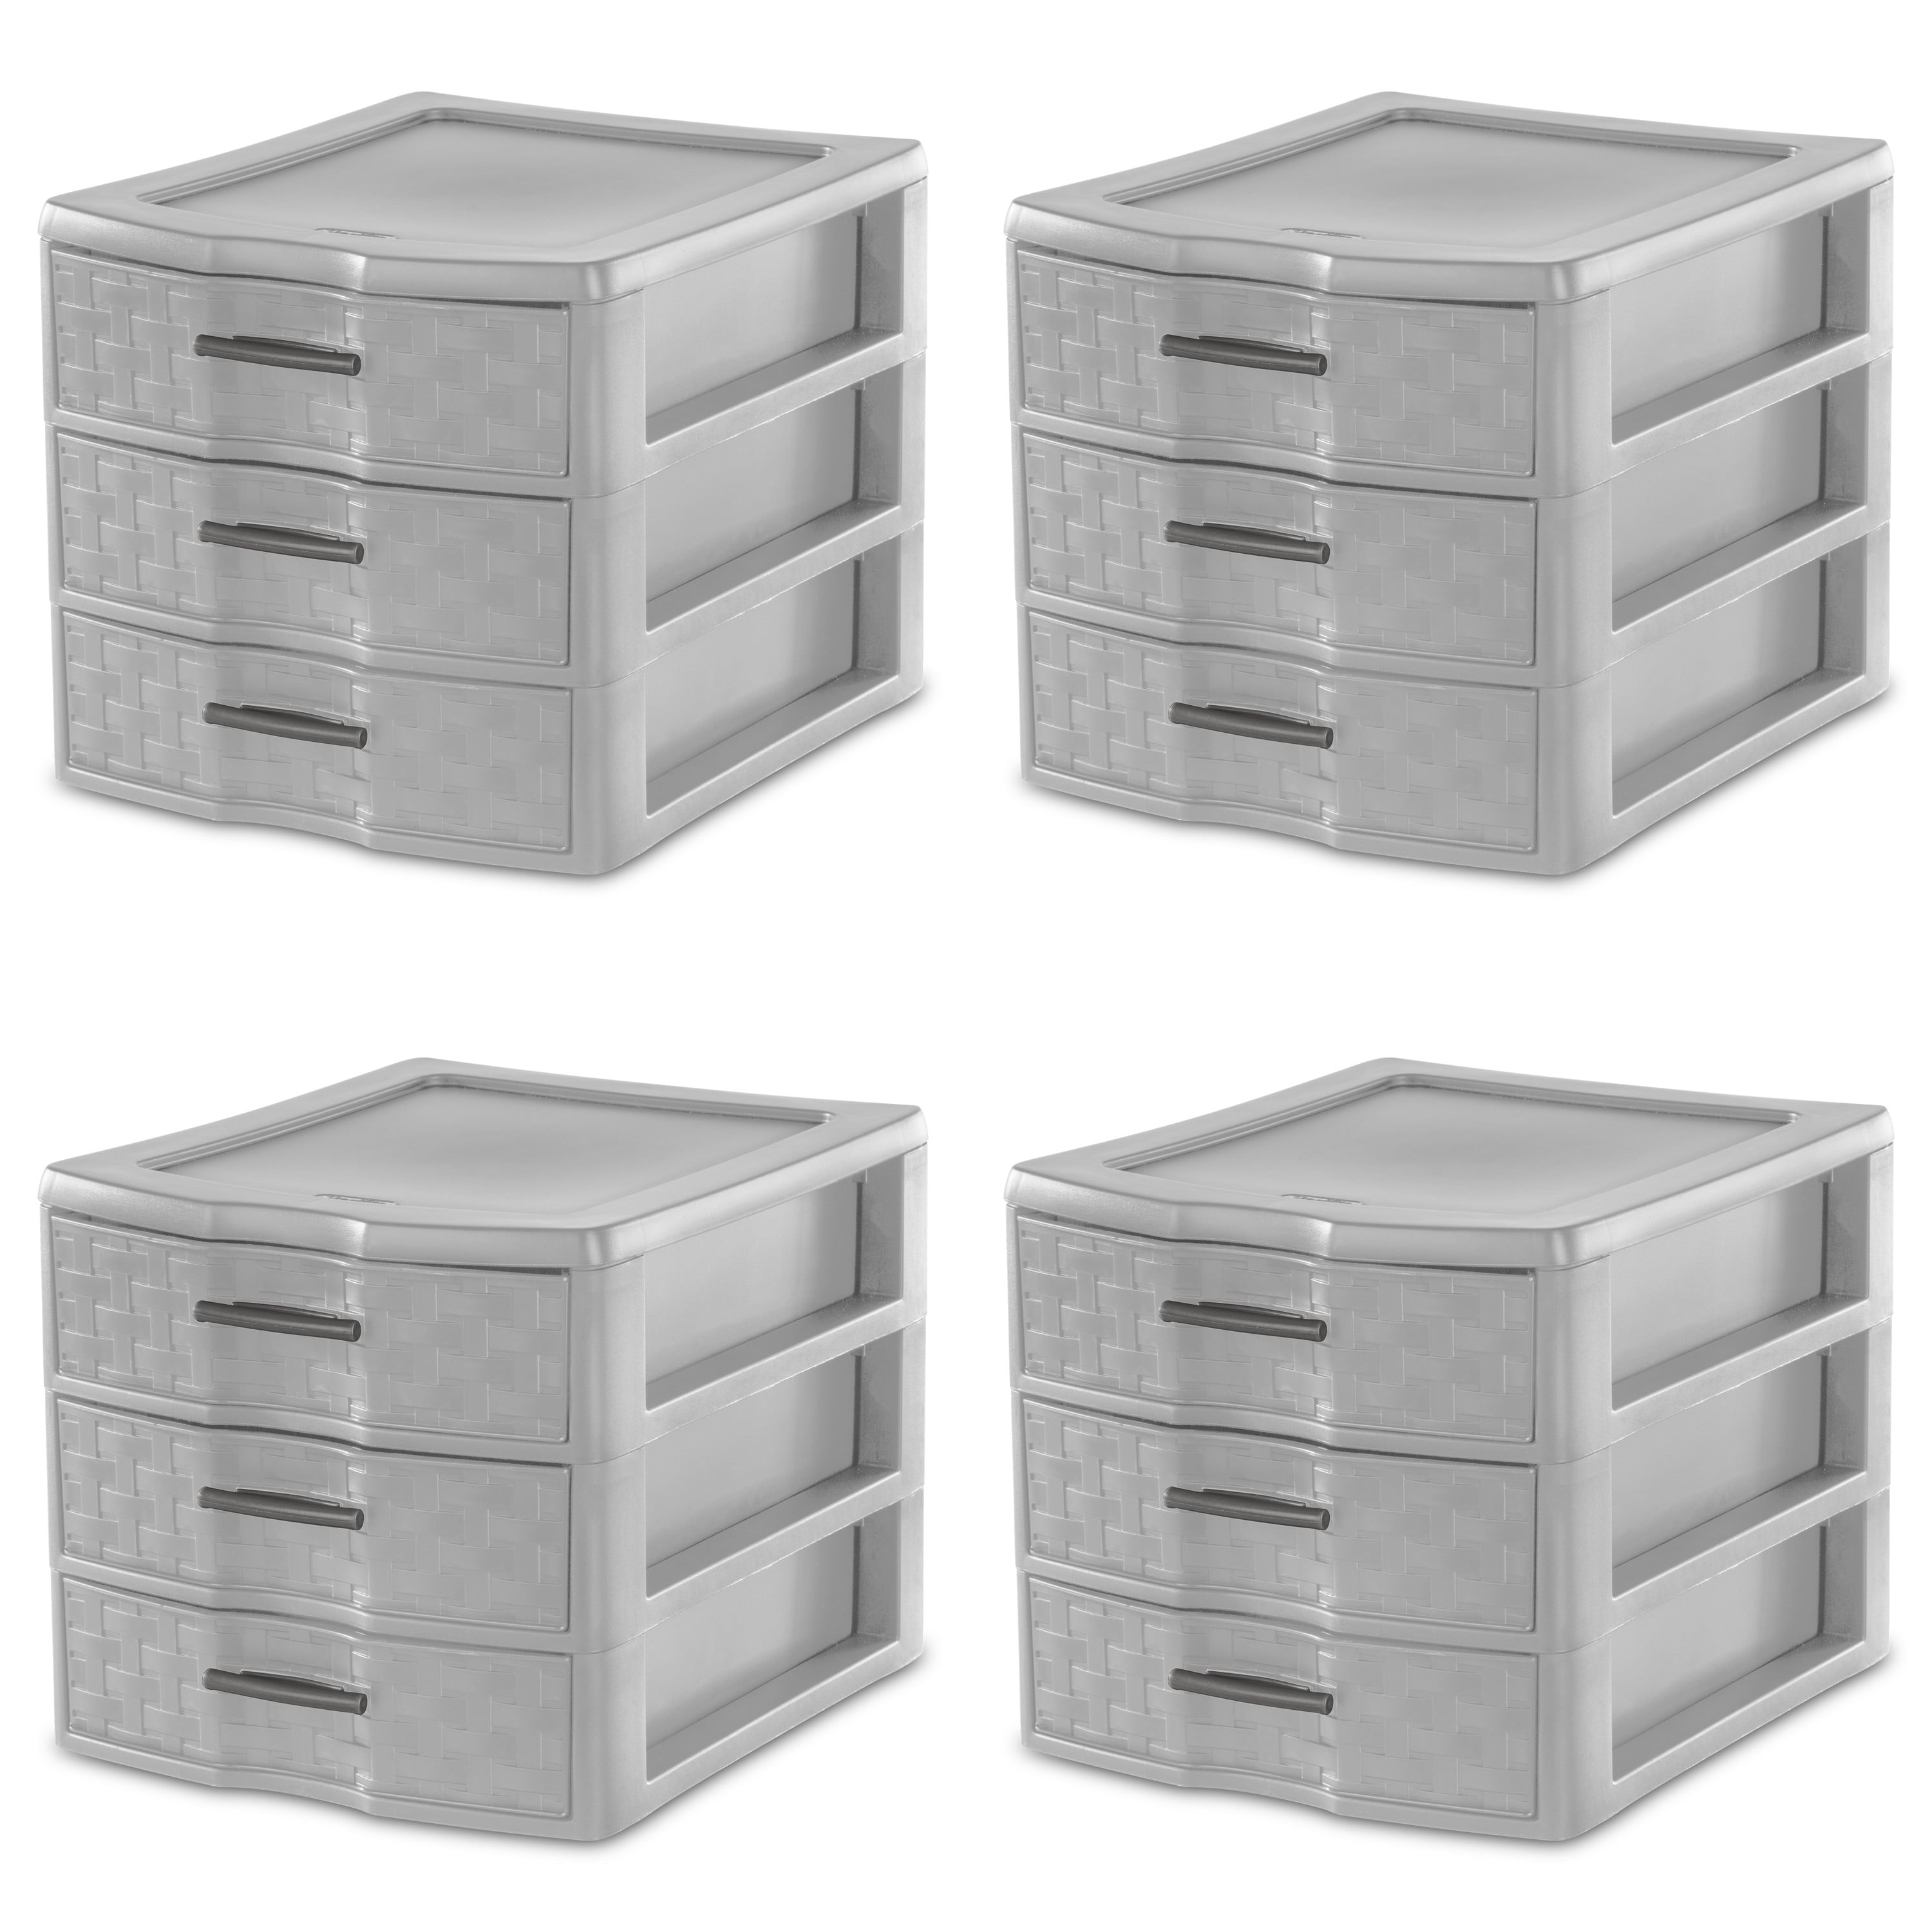 Storage drawers weave Drawer Storage